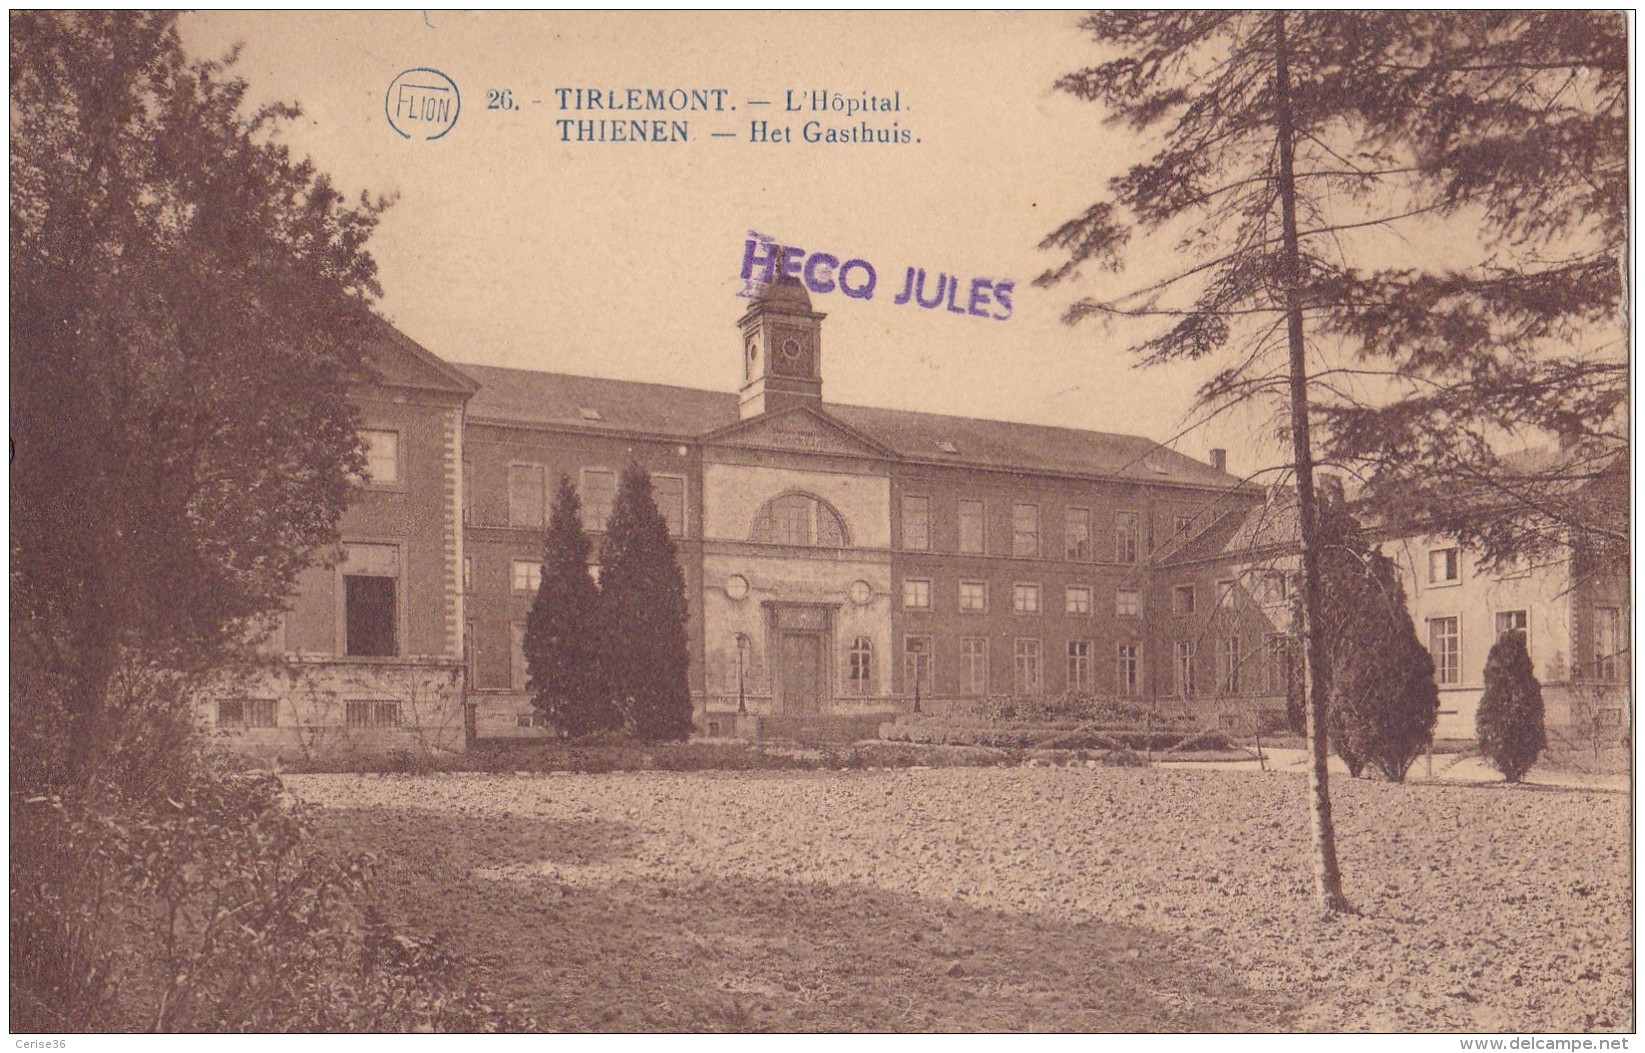 Tirlemont L'Hôpital Circulée - Tienen